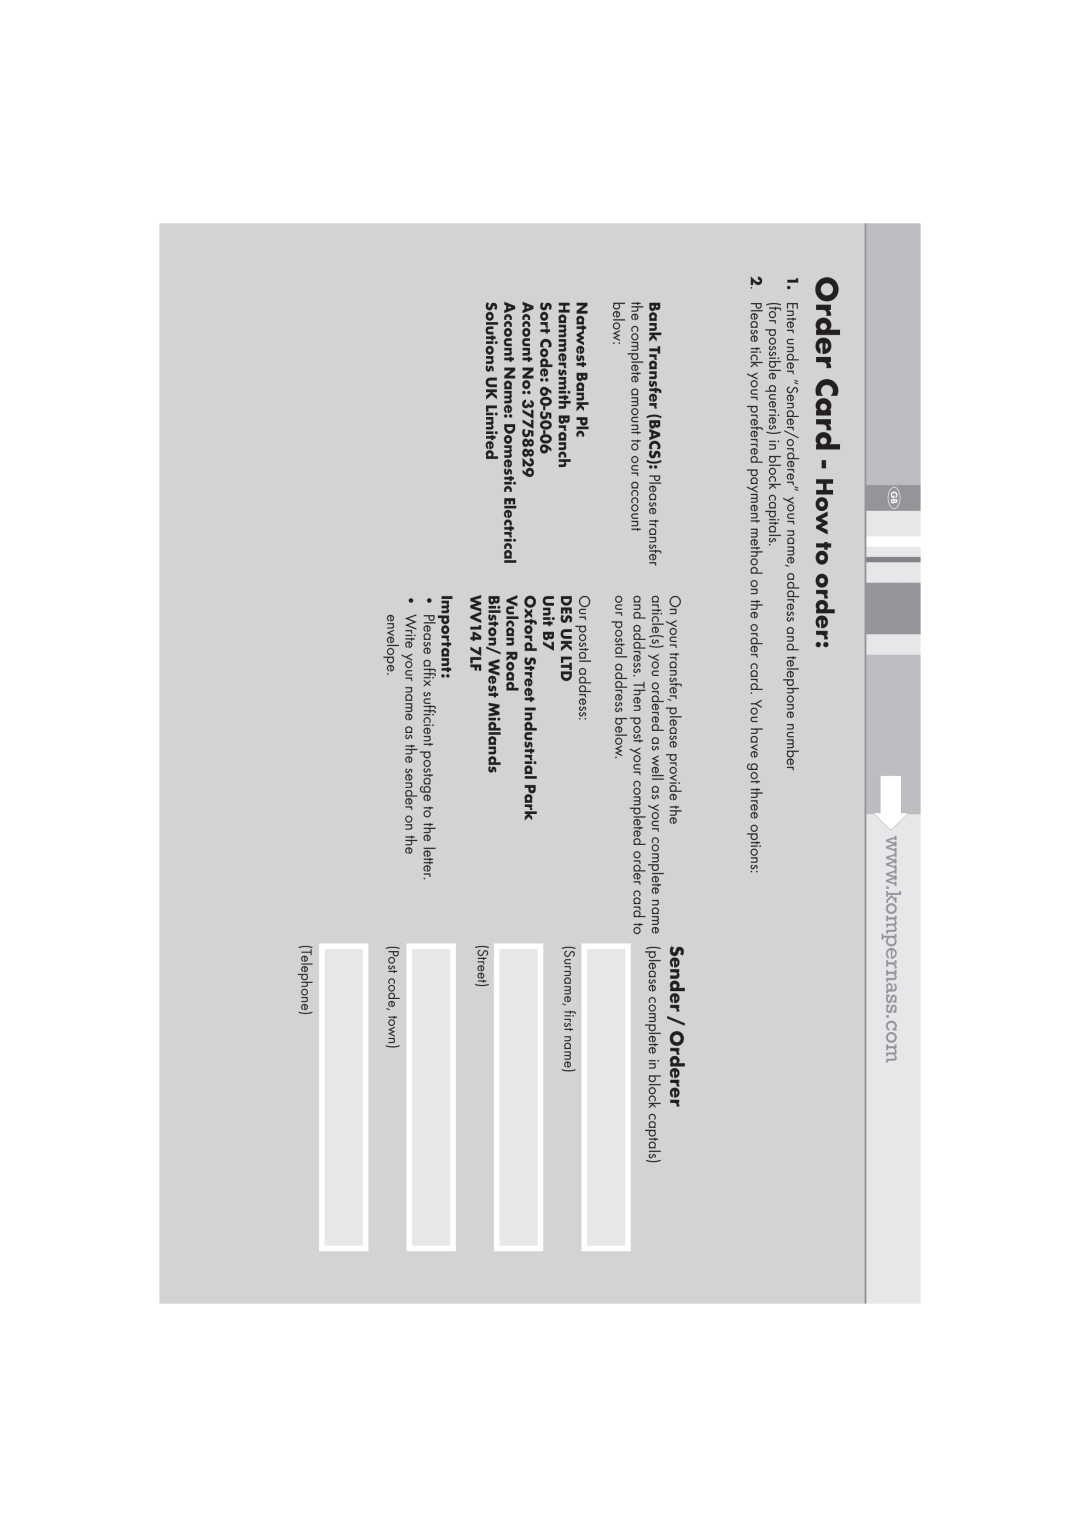 Silvercrest SFS 150 A2 manual Order Card - How to order, Sender / Orderer 